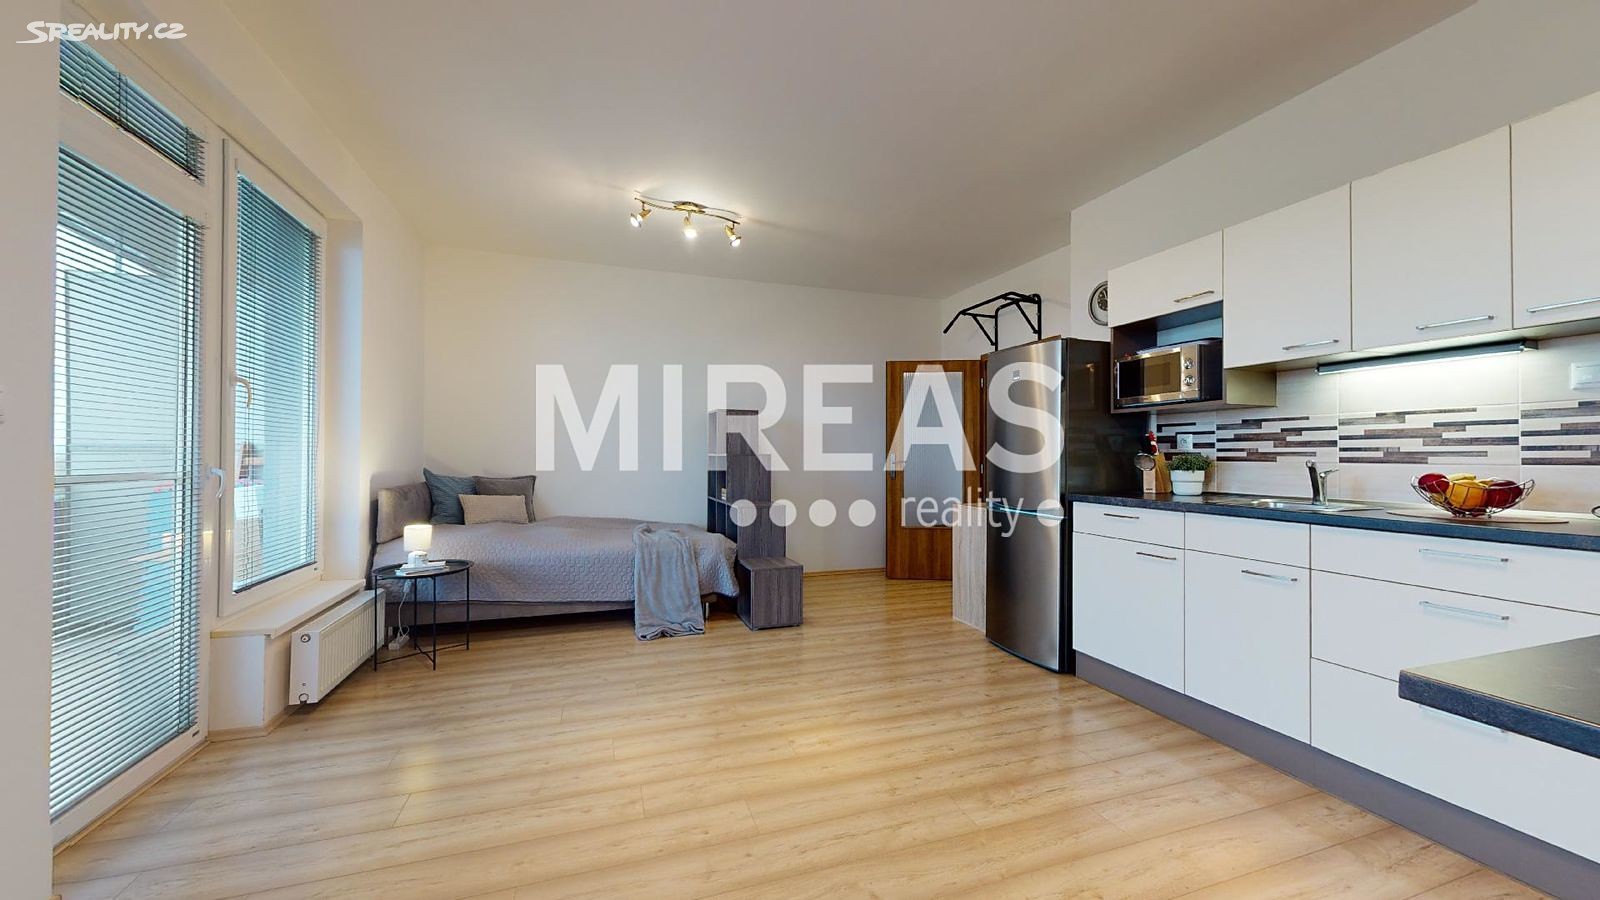 Prodej bytu 1+kk 13 m², Mladá Boleslav - Michalovice, okres Mladá Boleslav